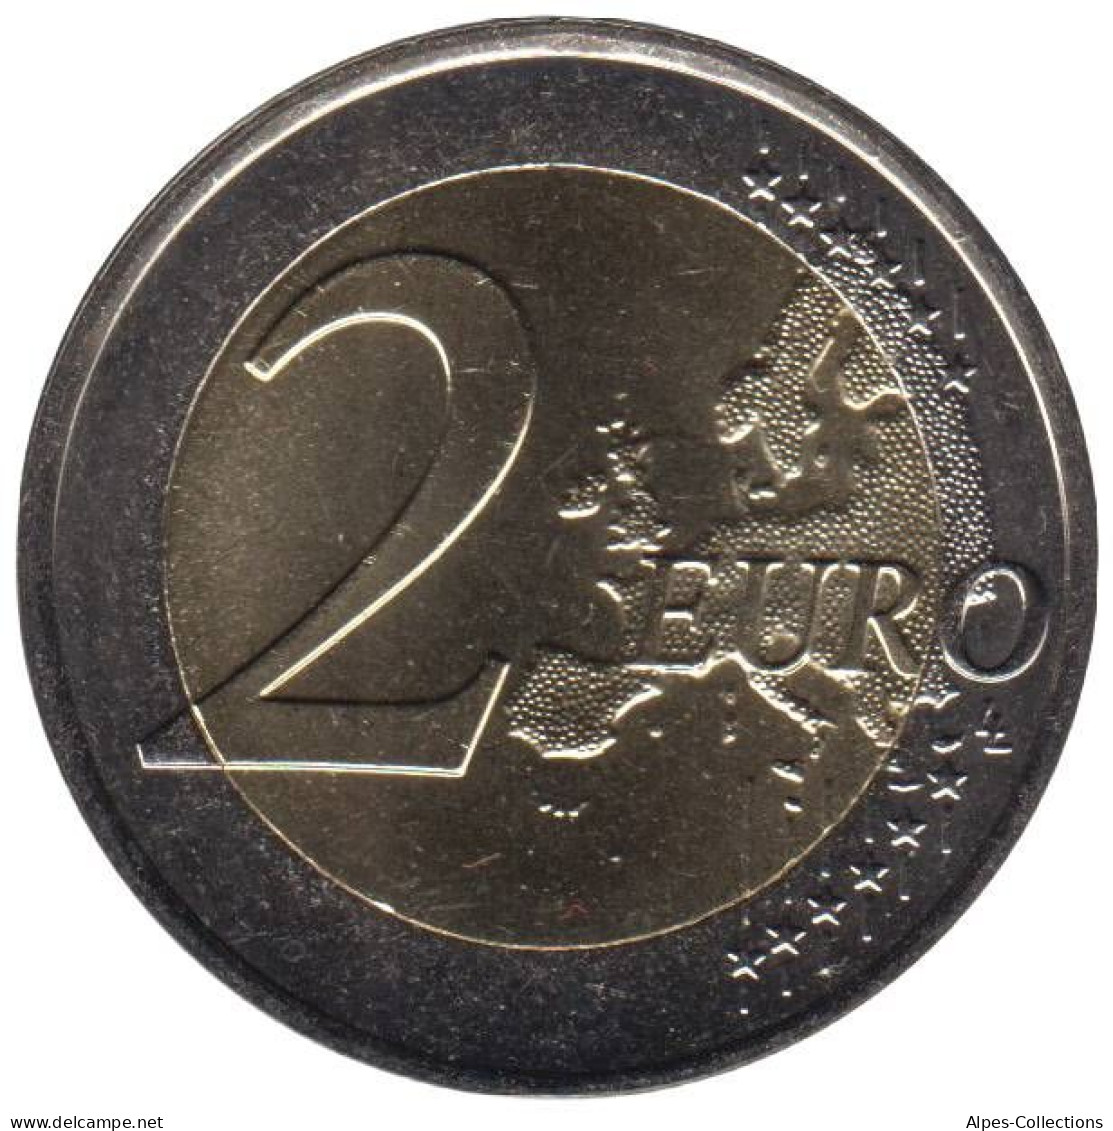 PB20014.4 - PAYS-BAS - 2 Euros - 2014 - Paesi Bassi